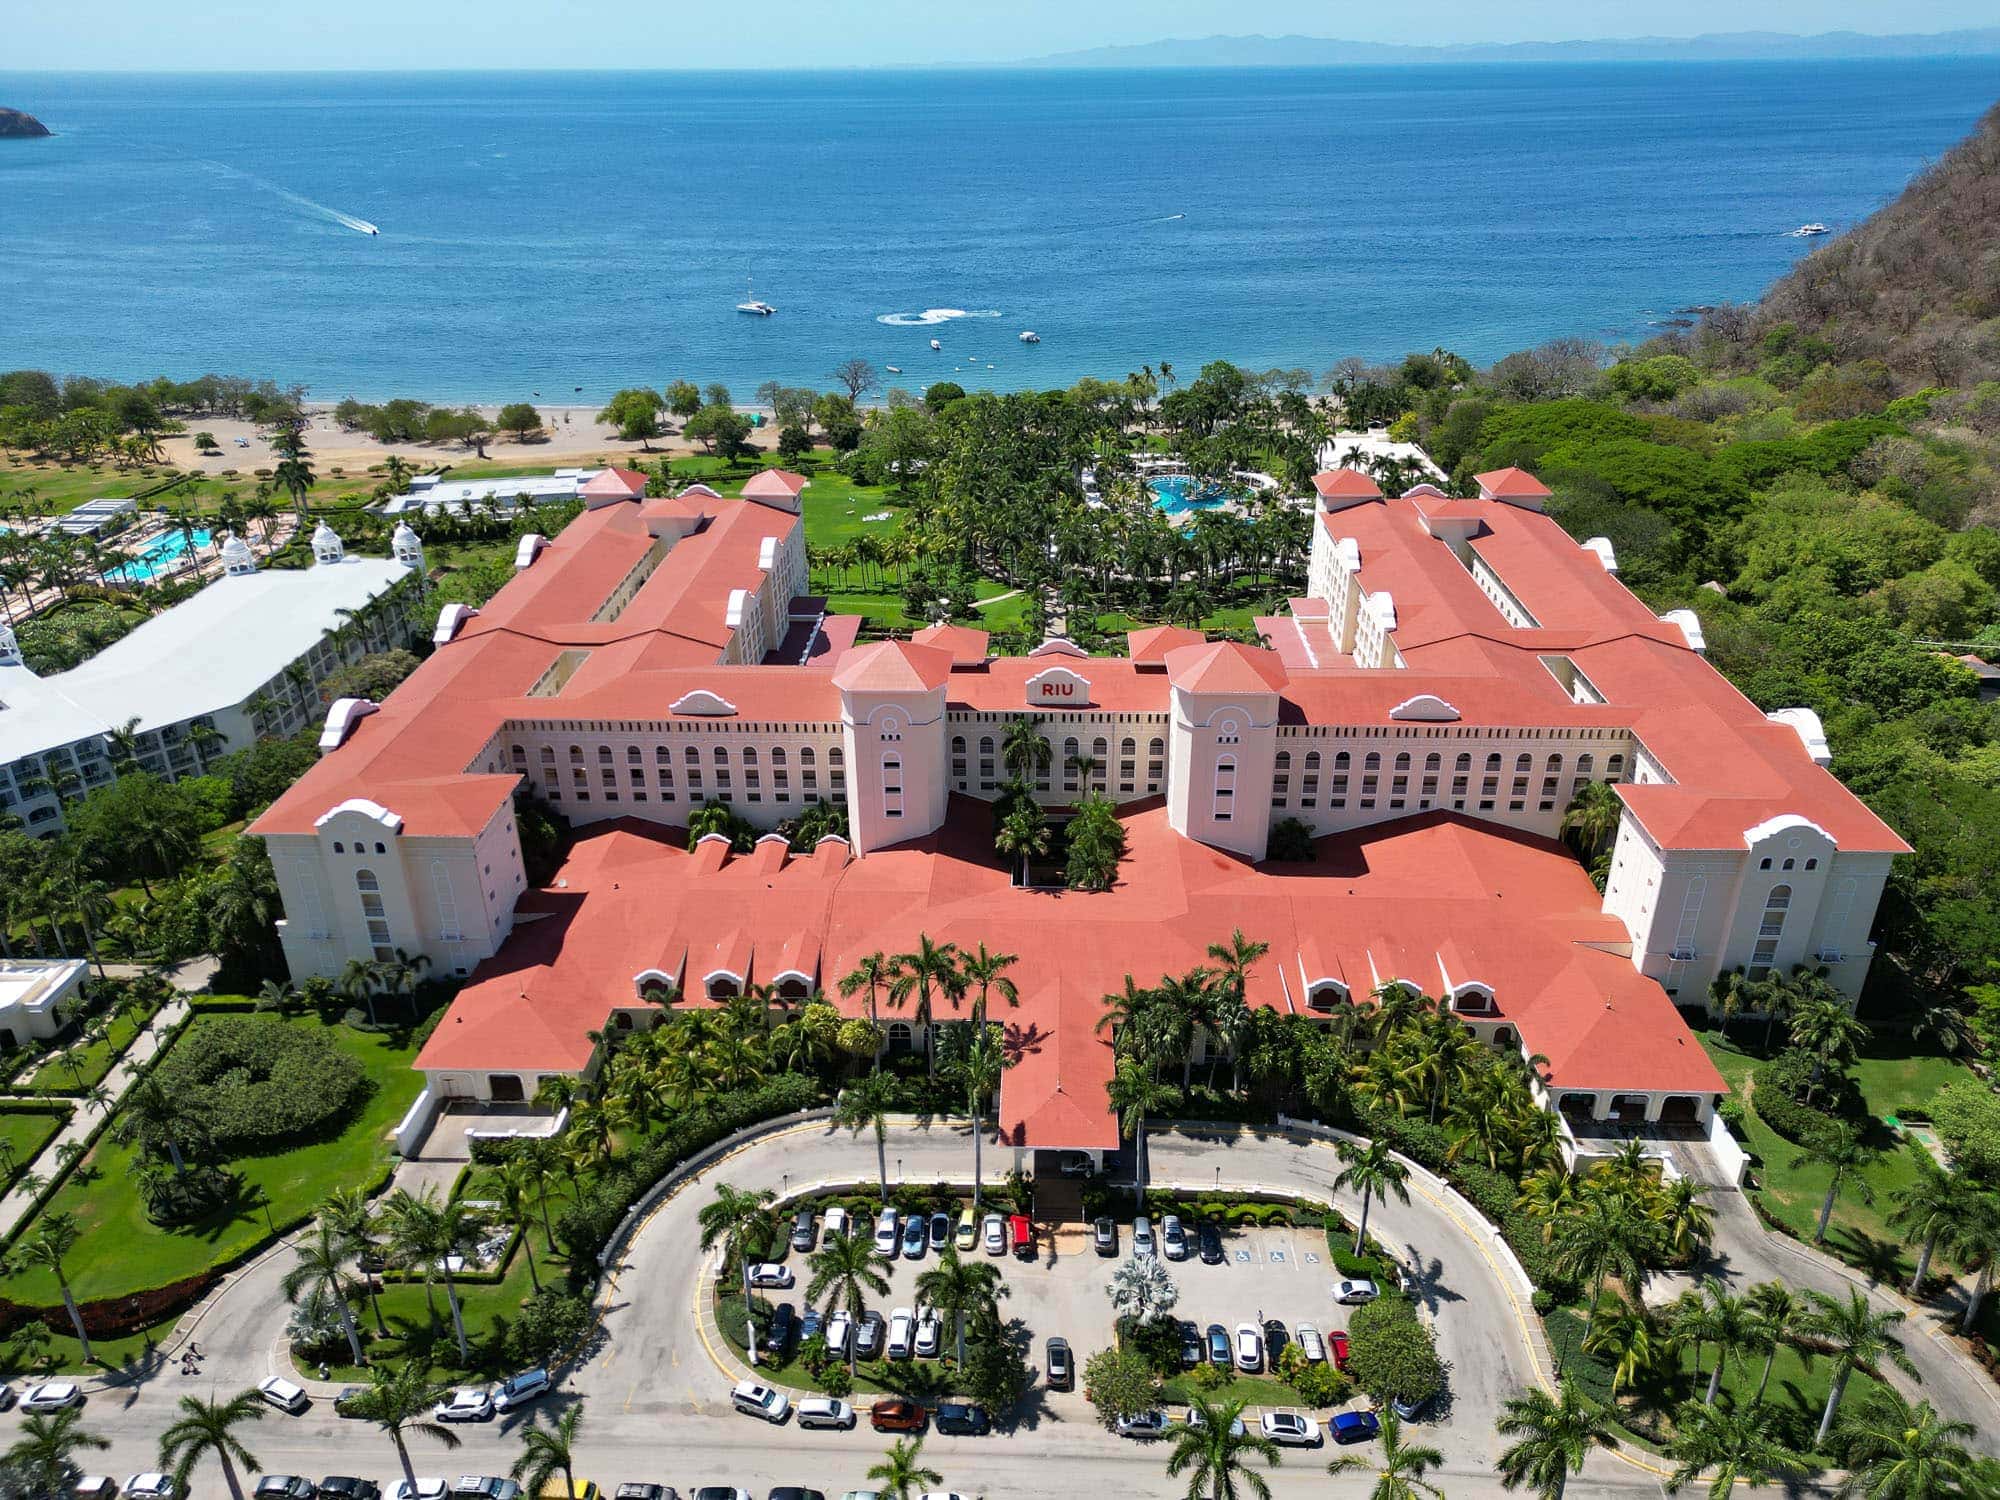 Aerial view of the impressive Riu Guanacaste resort